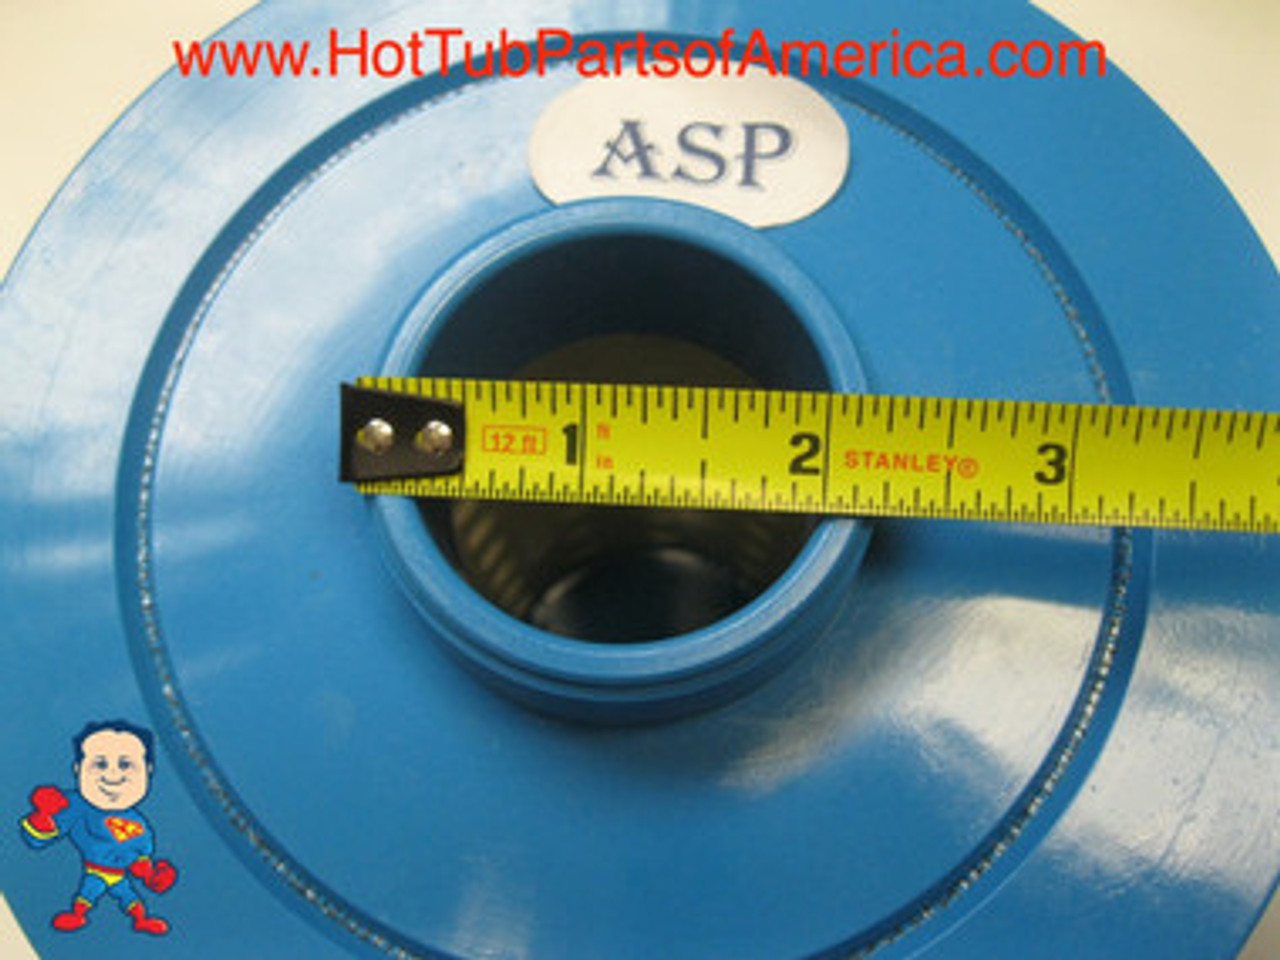 Artesian, Resort Series, Filter, Cartridge, 50sqft, 2" male pipe thread, 6-3/4" Wide, 8" Tall